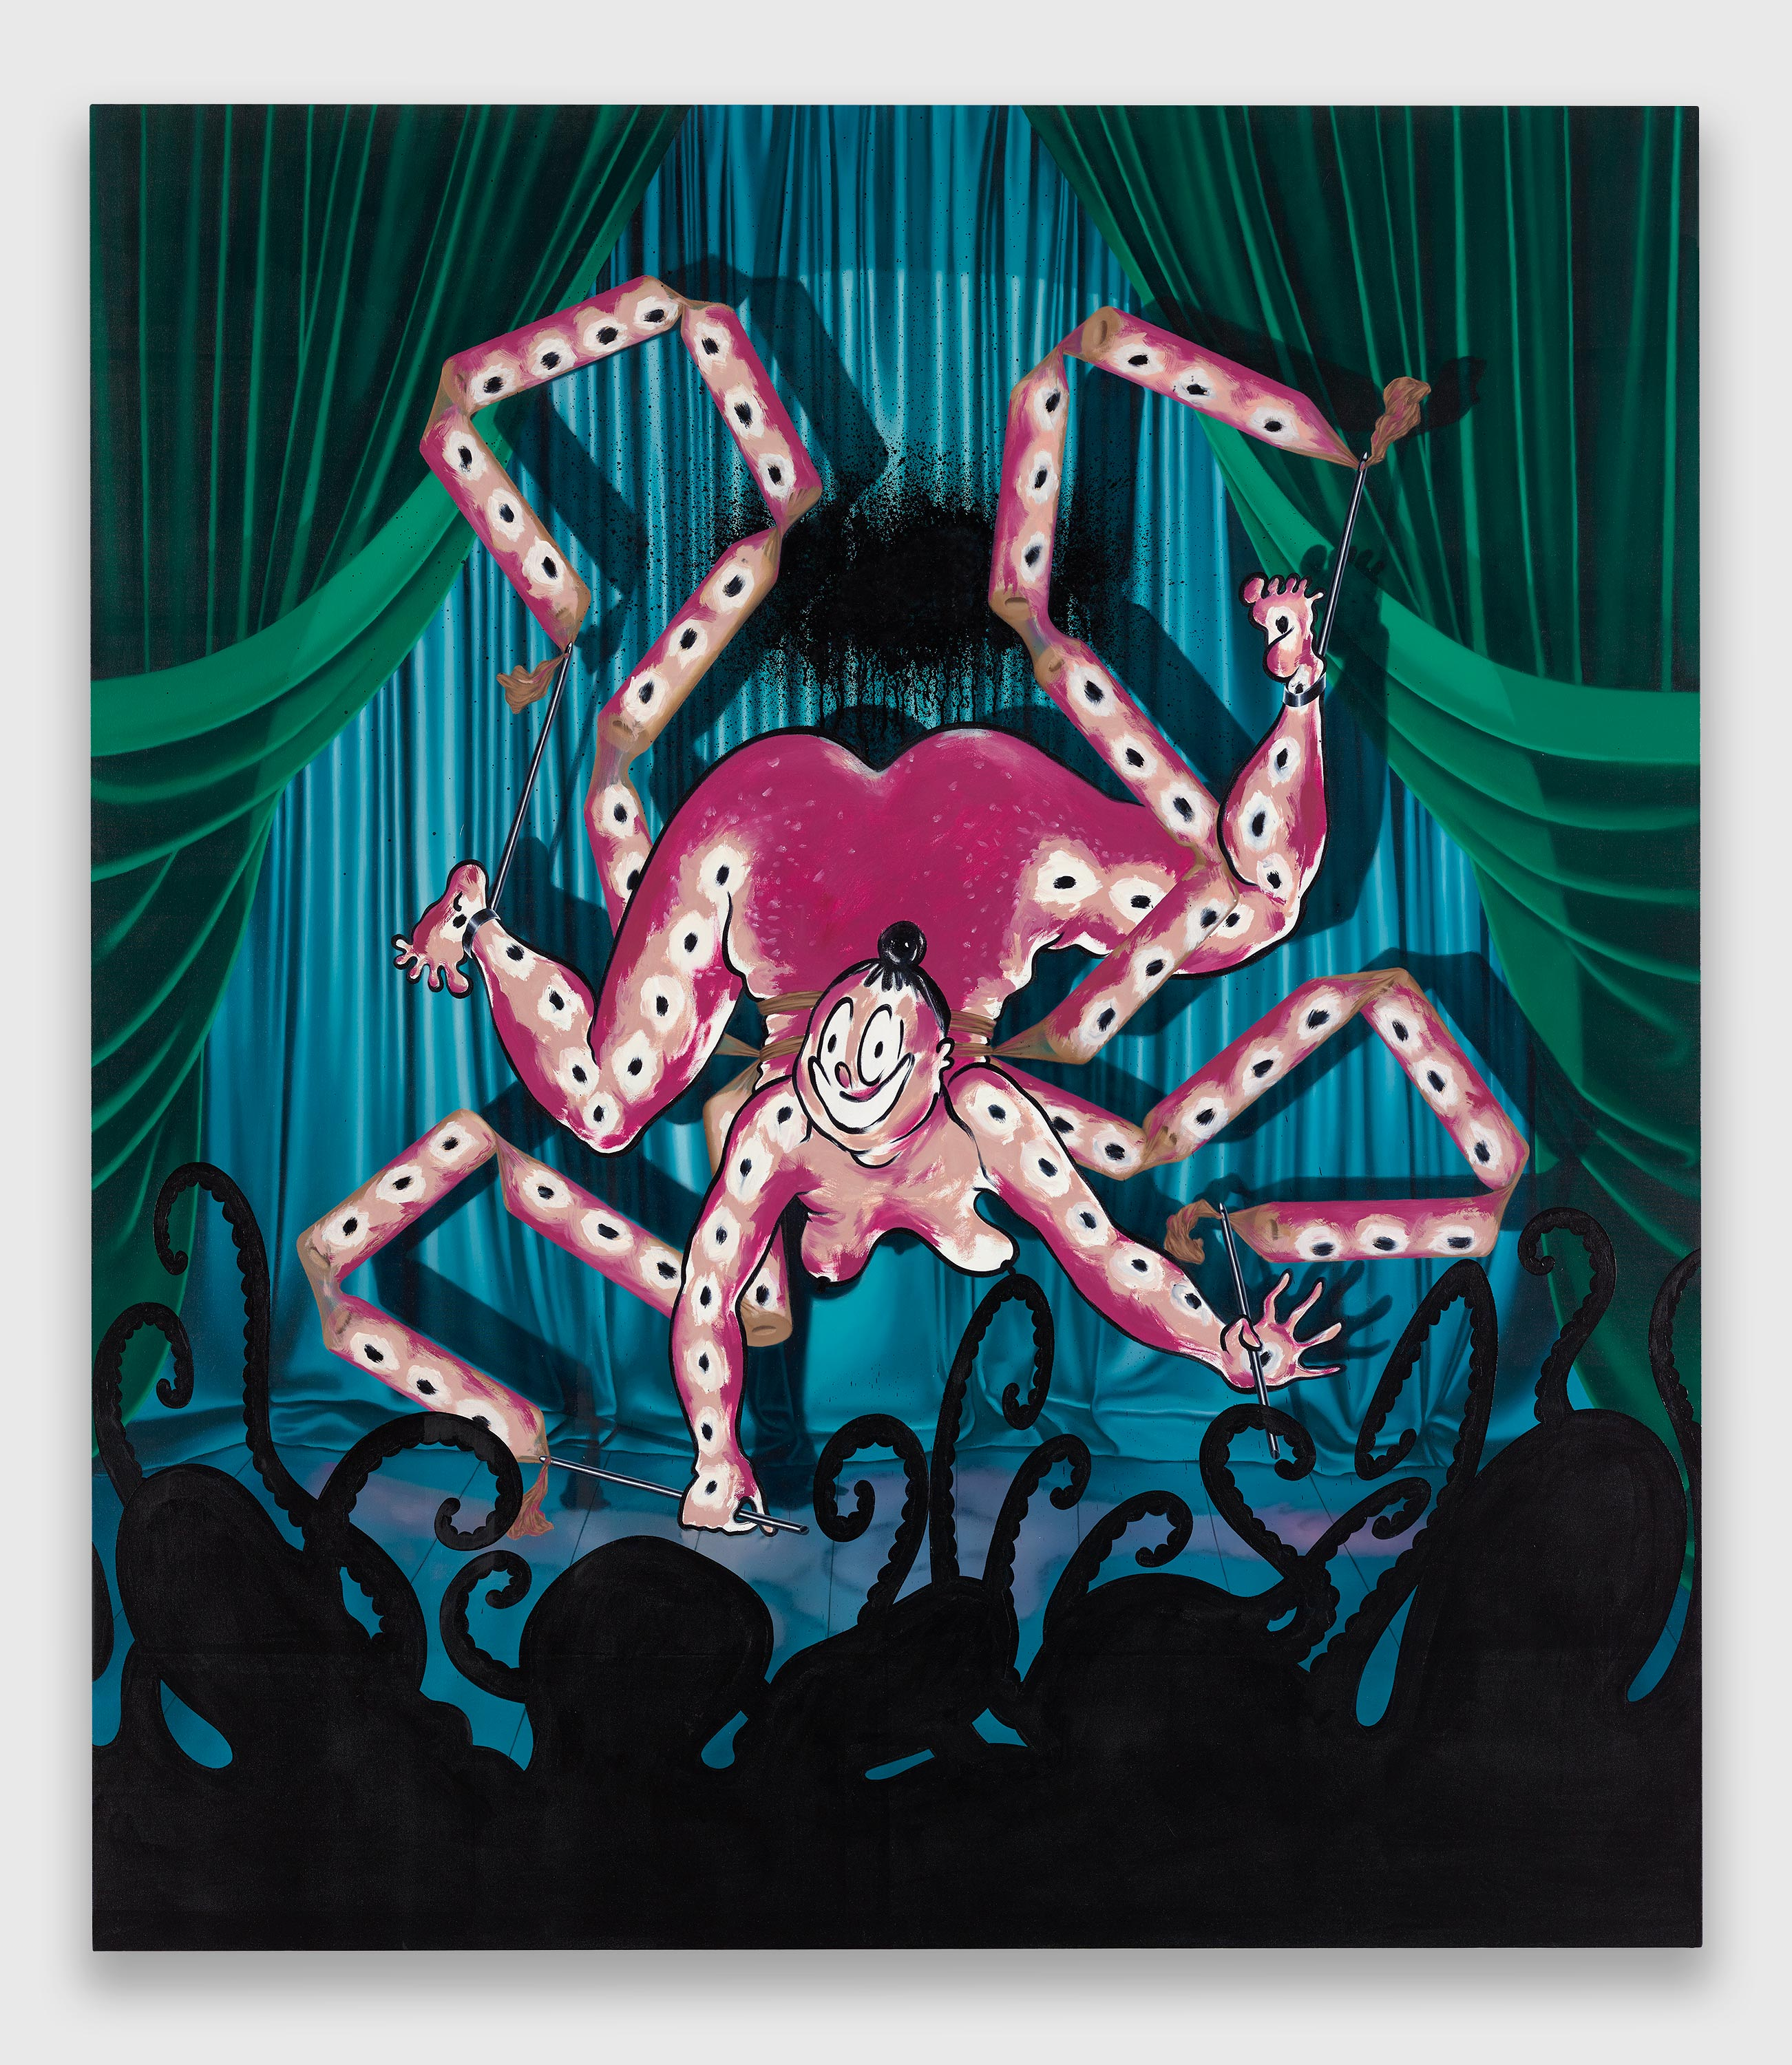 Ebecho Muslimova, Fatebe Octopus, 2021, Oil on canvas, 72h x 63w in. Courtesy of Ebecho Muslimova, Galerie Maria Bernheim, Zurich, and Magenta Plains, New York.